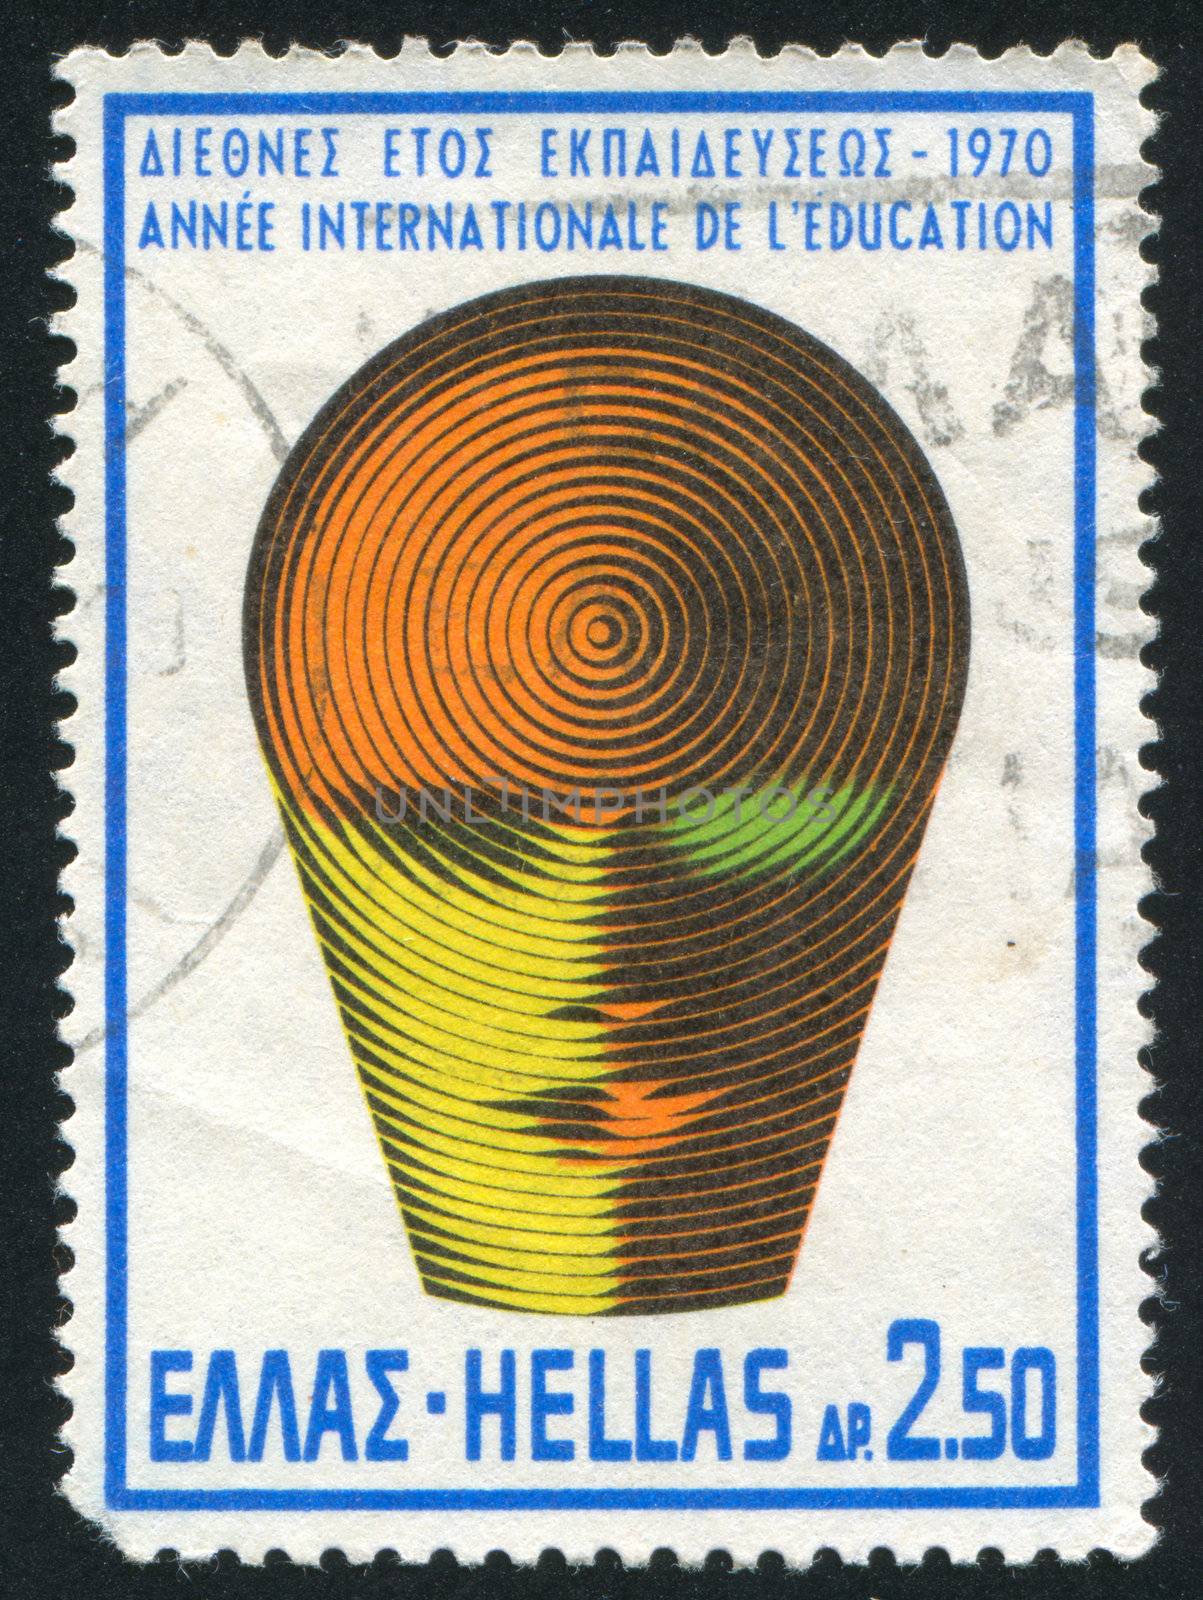 GREECE - CIRCA 1970: stamp printed by Greece, shows Education emblem, circa 1970